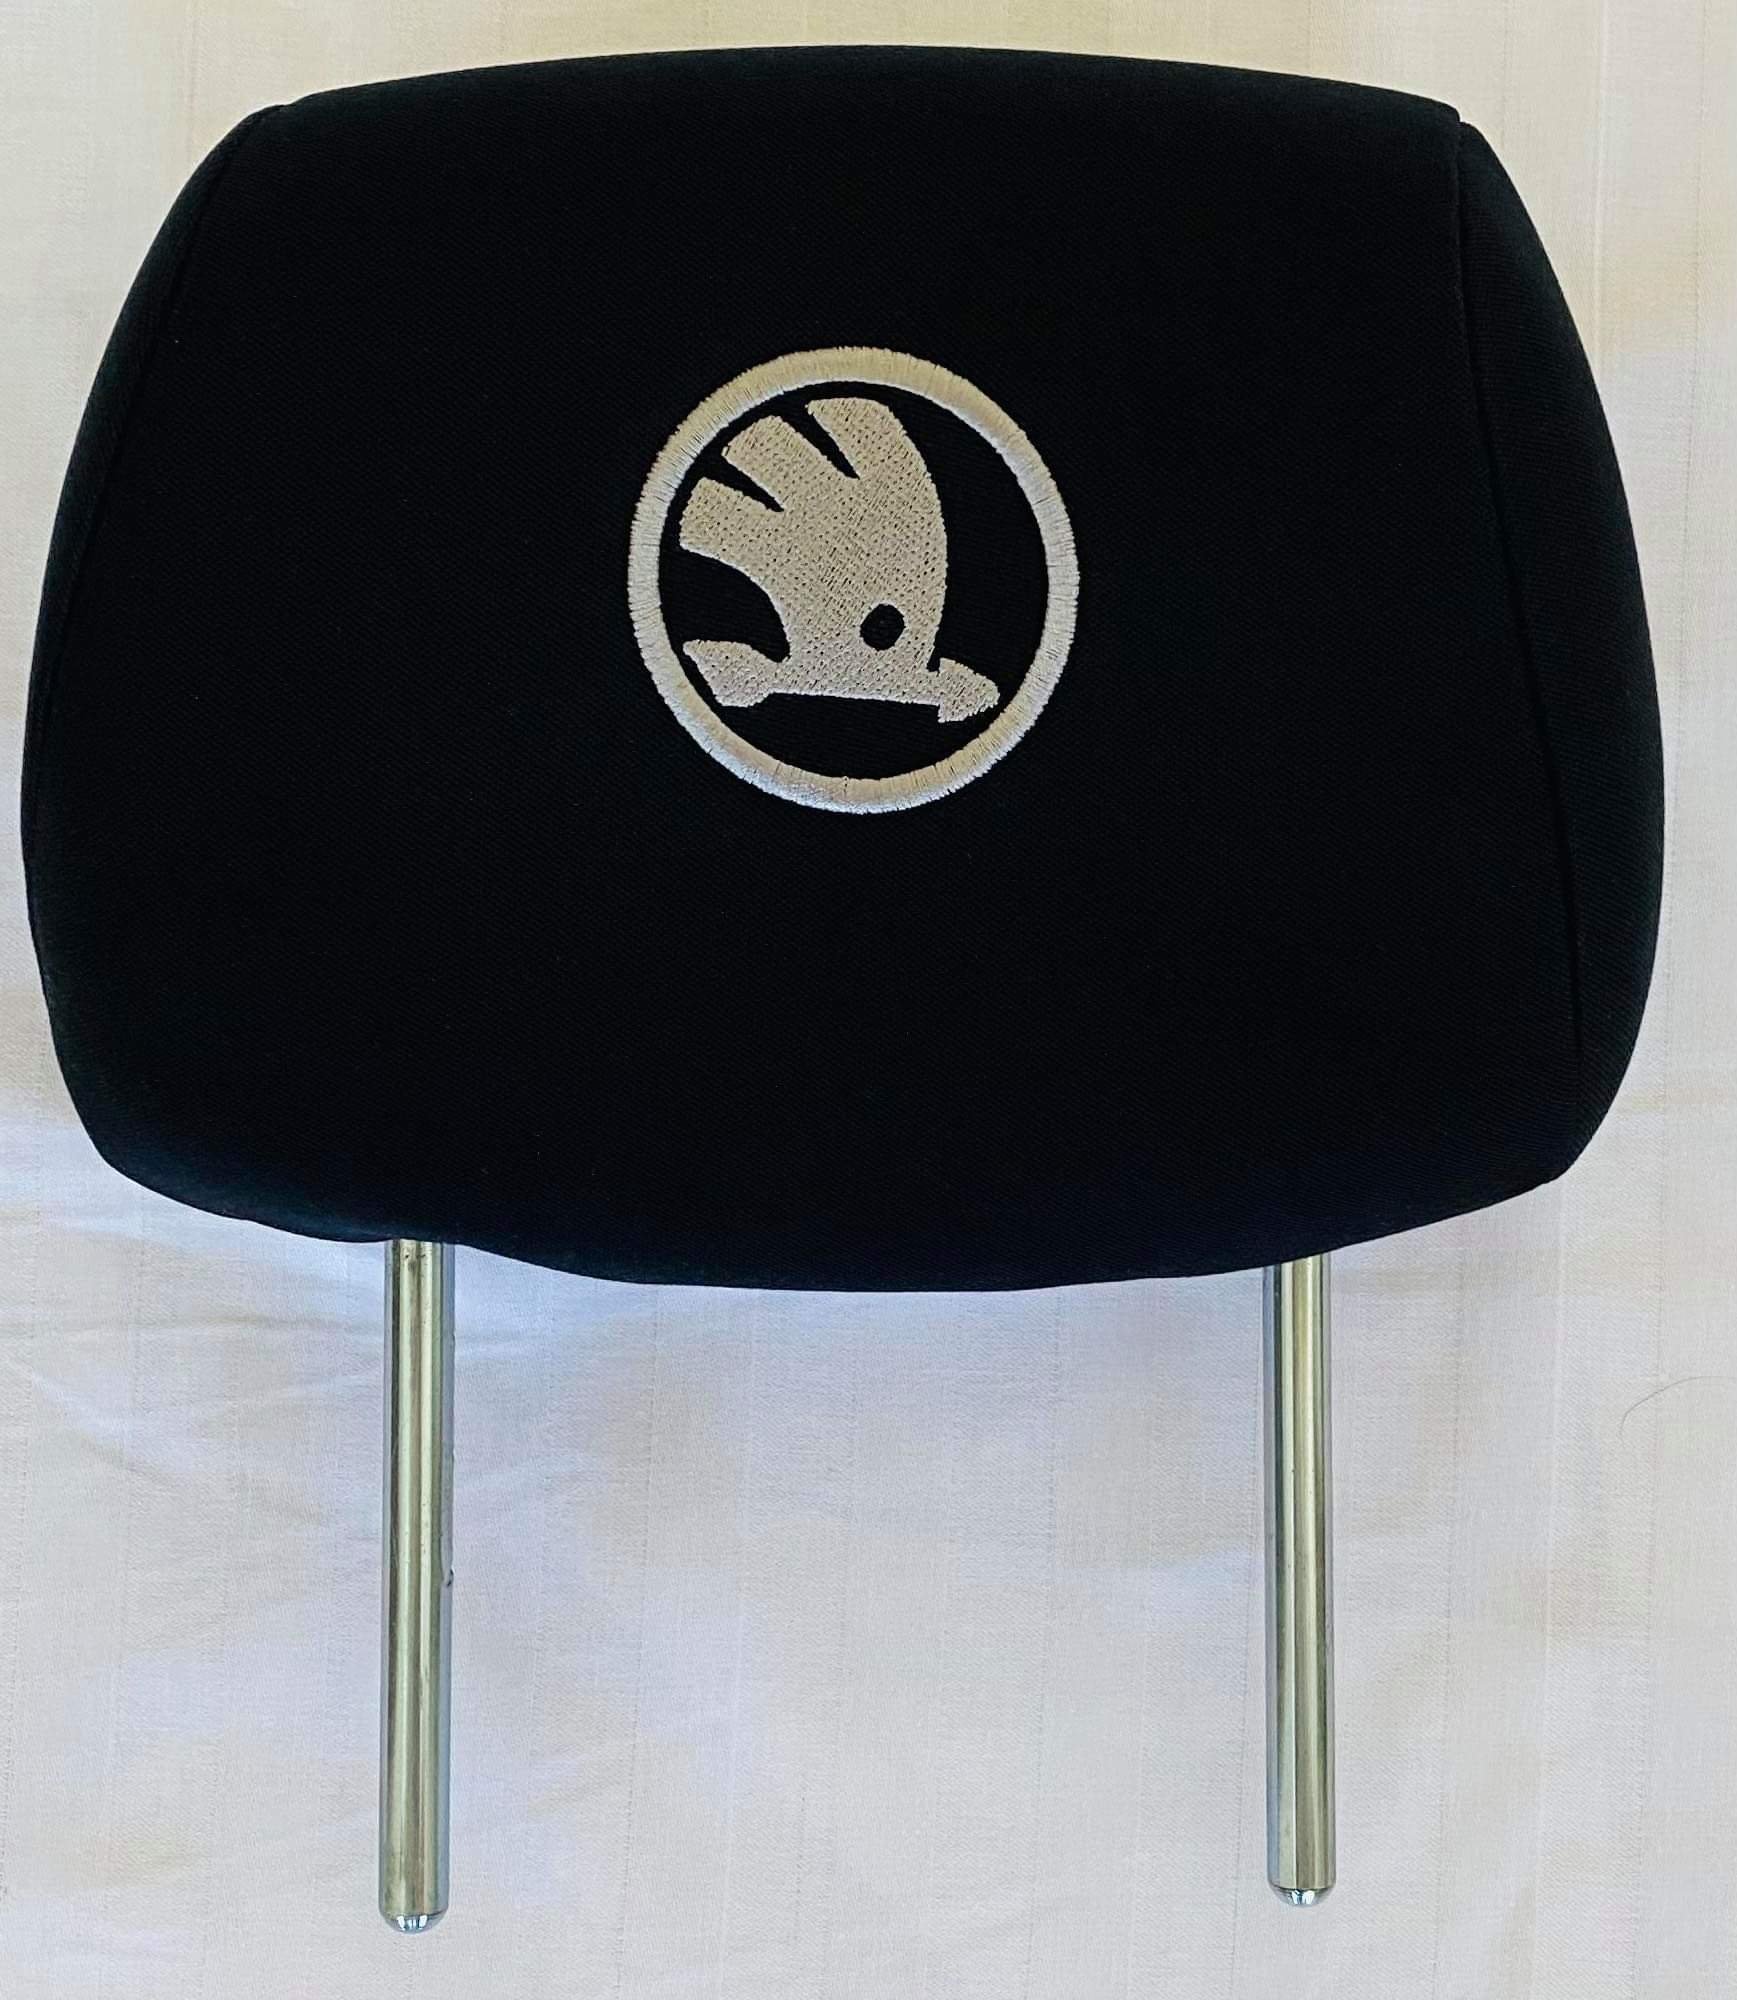 Čierne návleky na opierky hlavy s logom Škoda